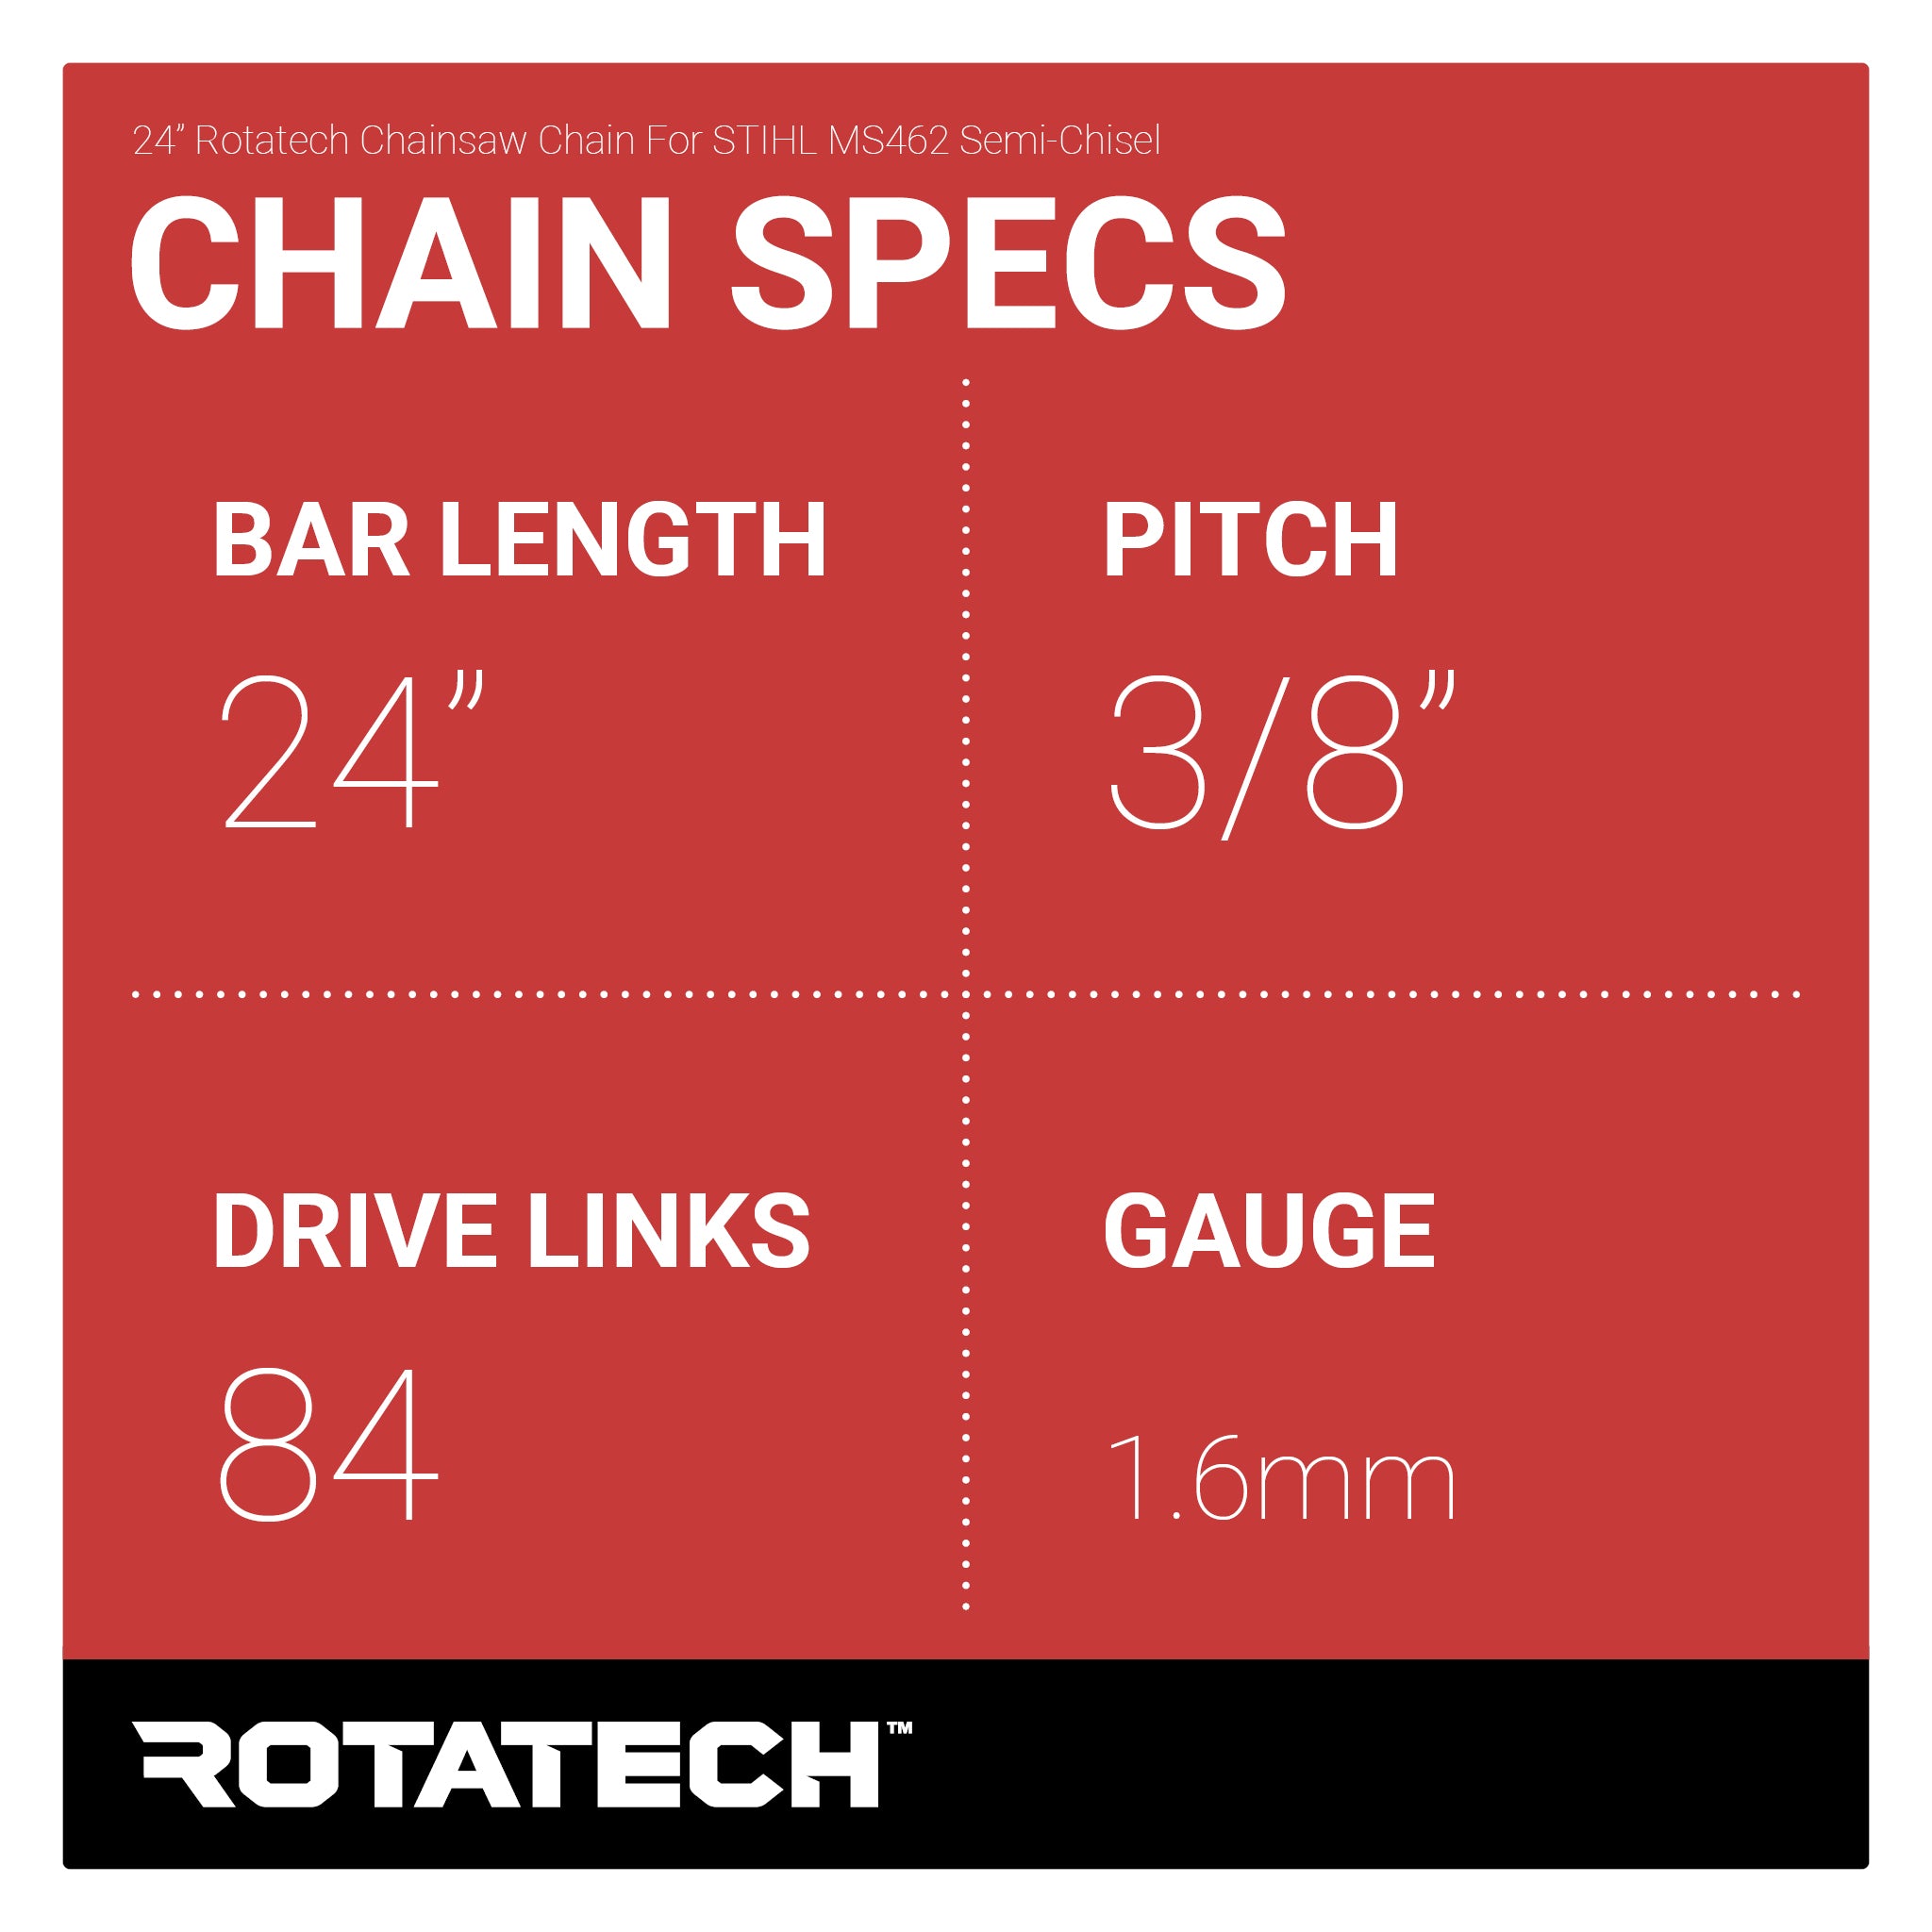 24" Rotatech Chainsaw Chain For STIHL MS462 Semi-Chisel Chain Specs